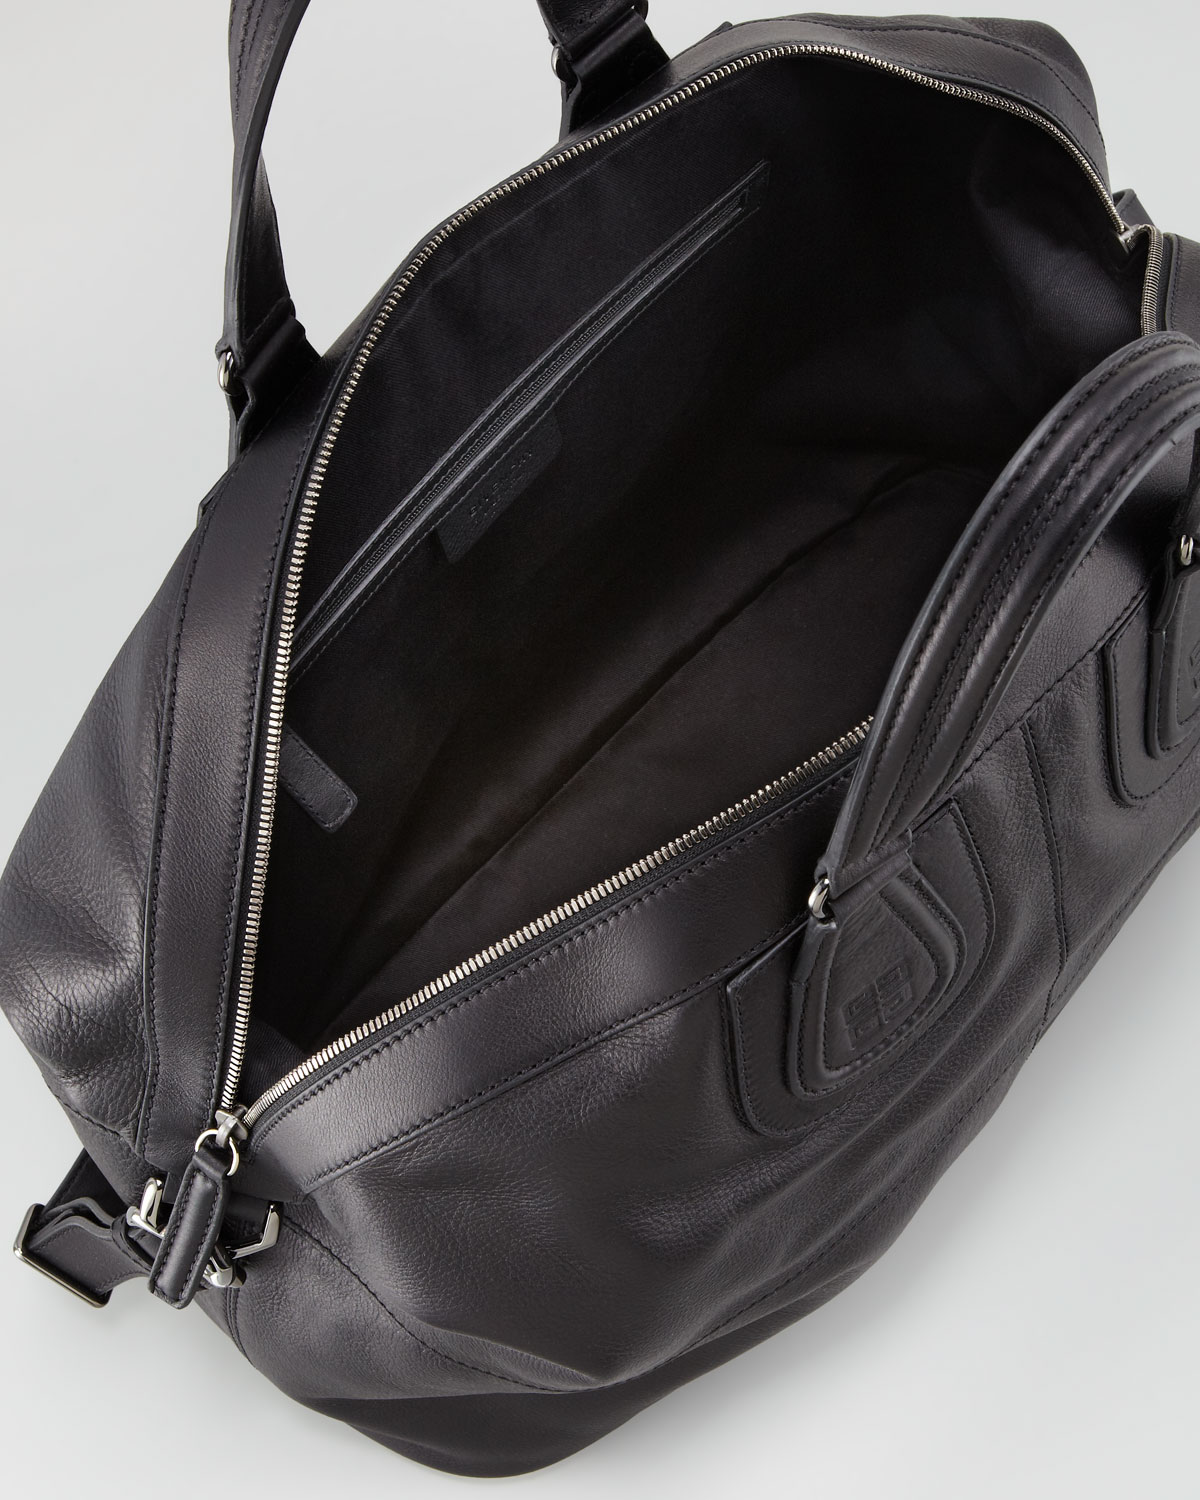 Lyst - Givenchy Nightingale Mens Large Leather Shoulder Bag Black in